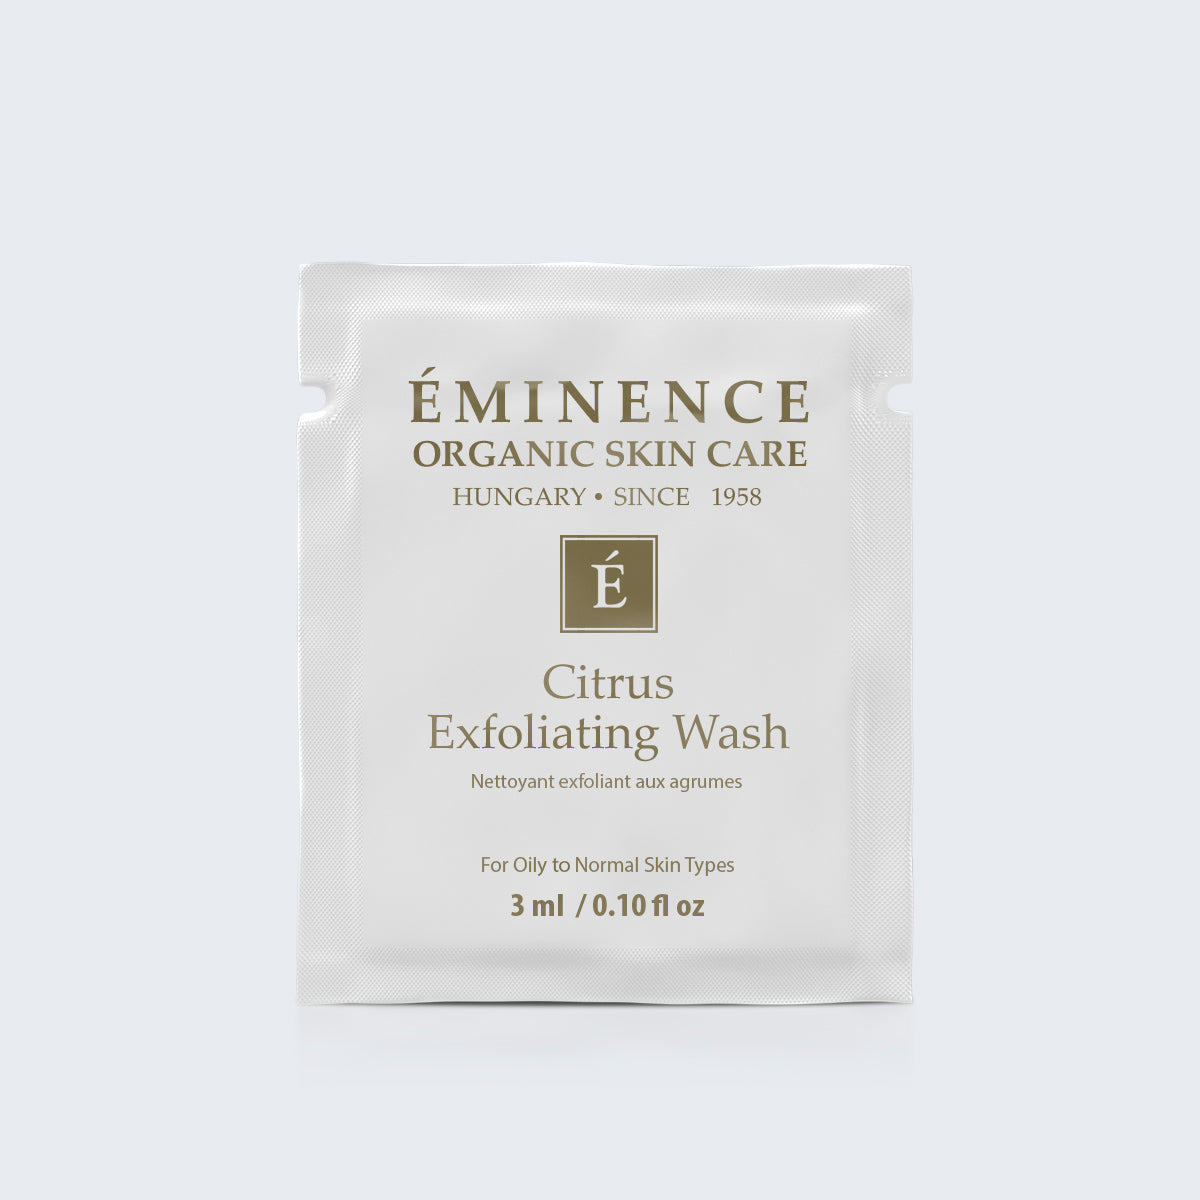 Eminence Organics Citrus Exfoliating Wash Card Sample